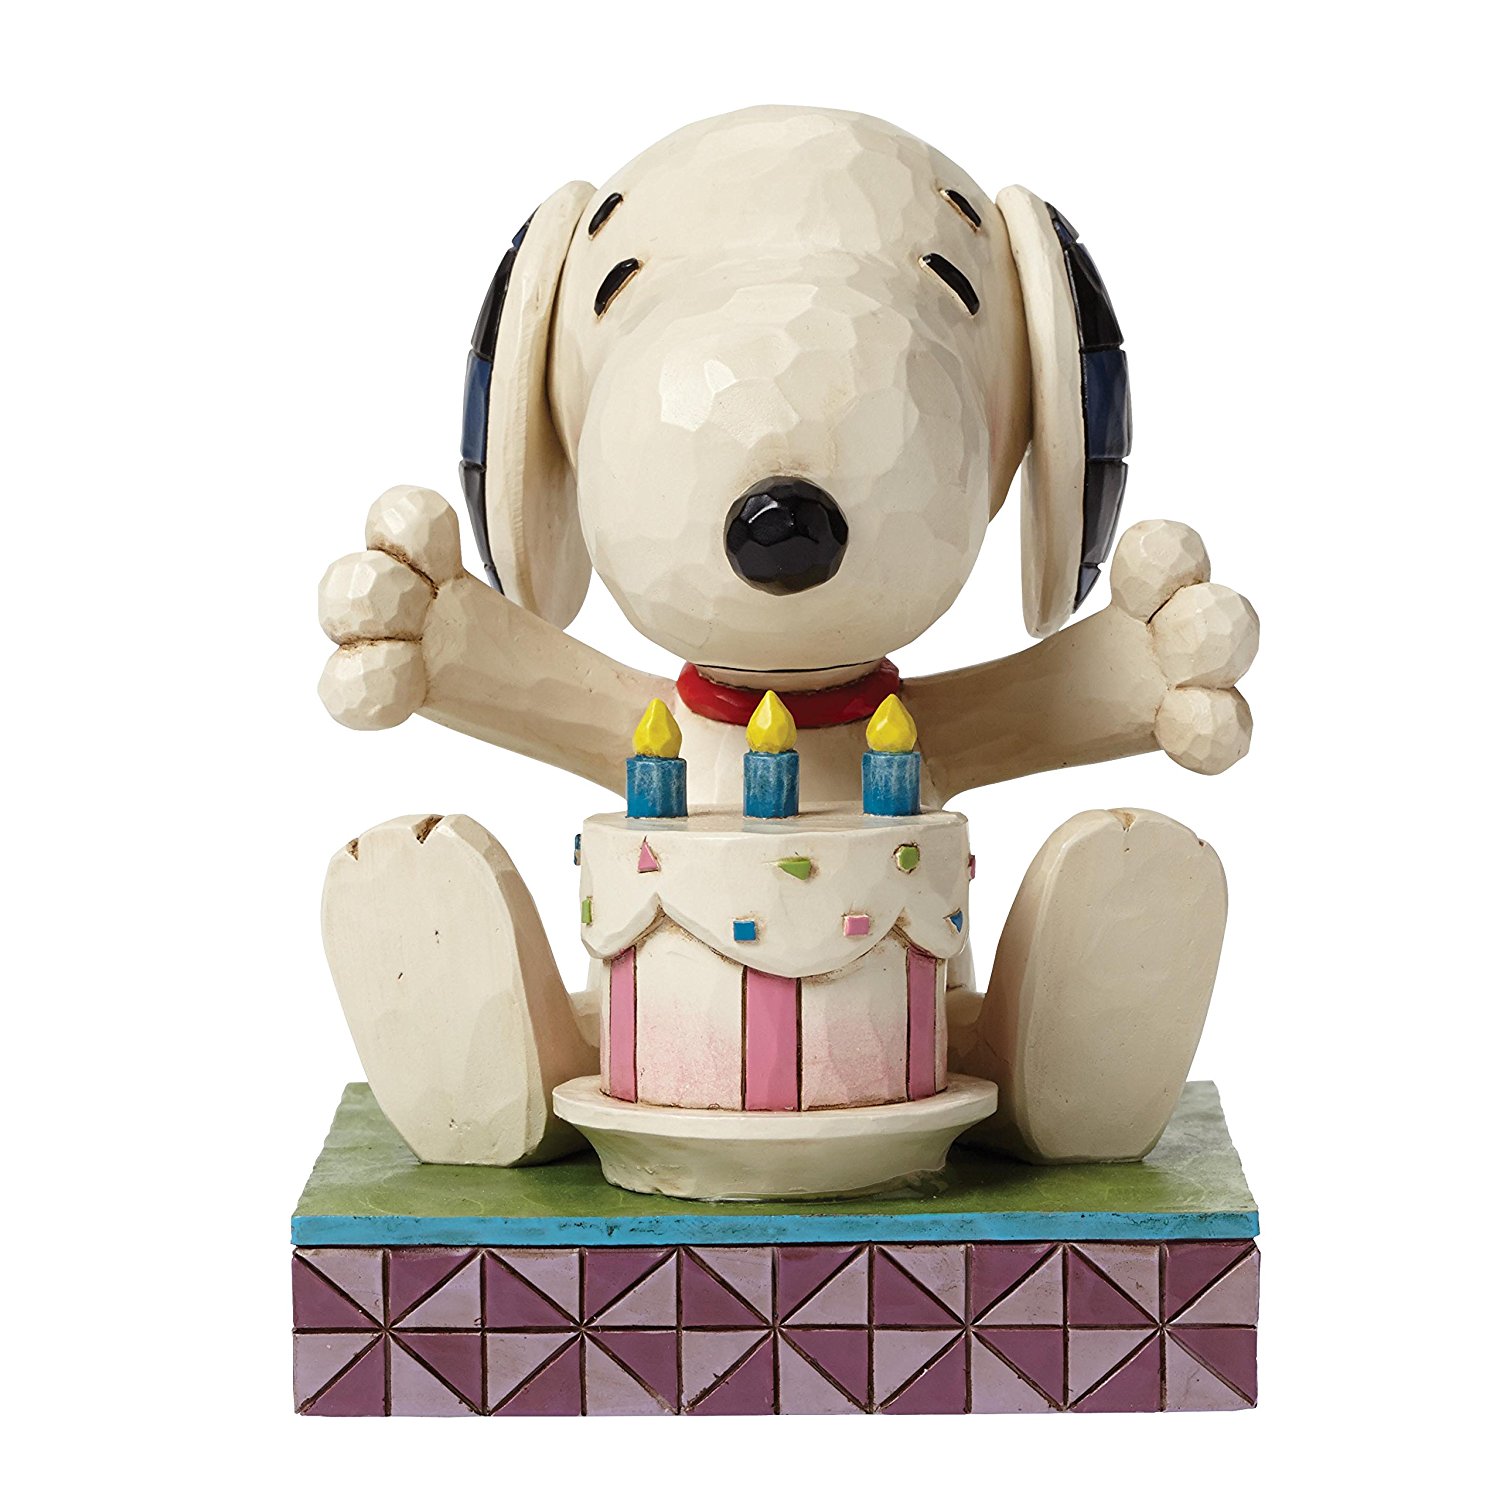 Happy Birthday Snoopy Figurine | Dragon Toys Teddy Bears and Soft Toys